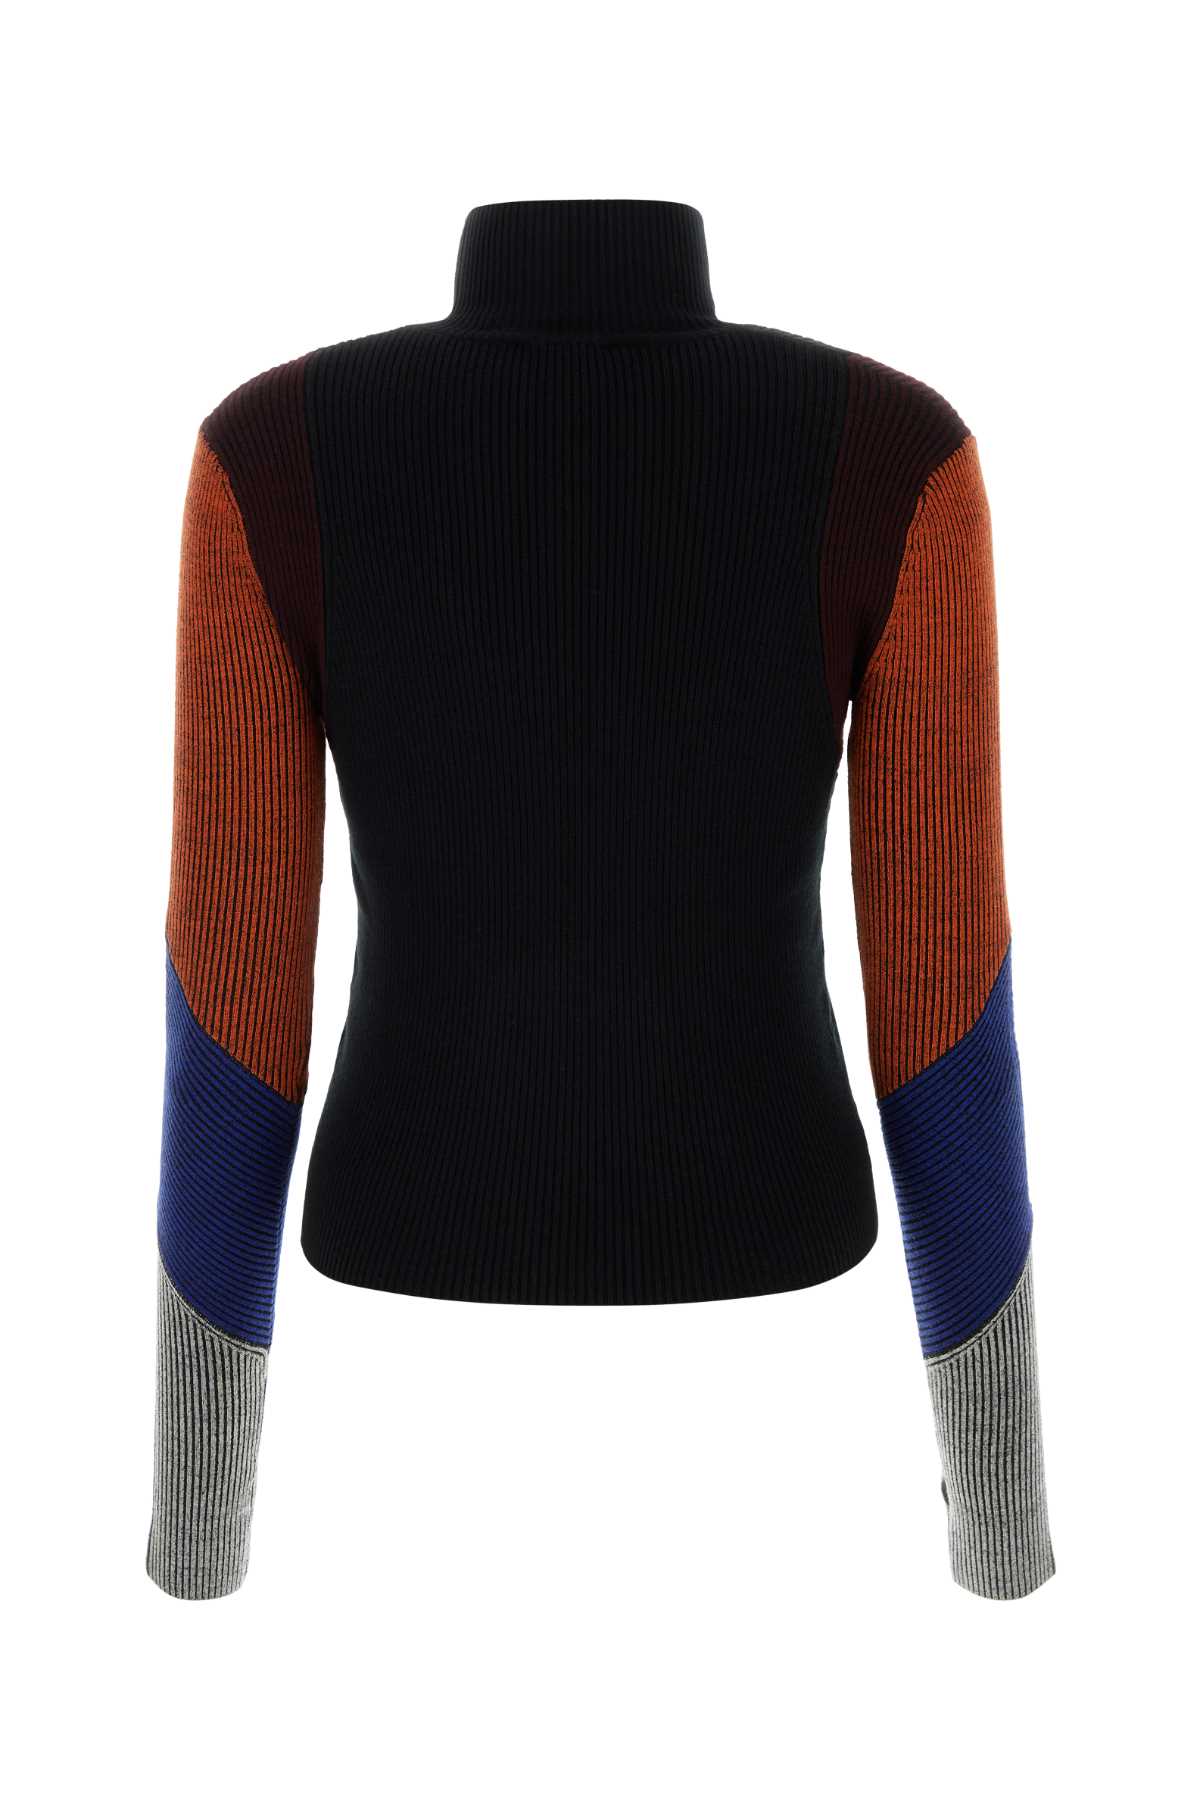 Chloé Black Stretch Wool Blend Jumper In Multicolor1